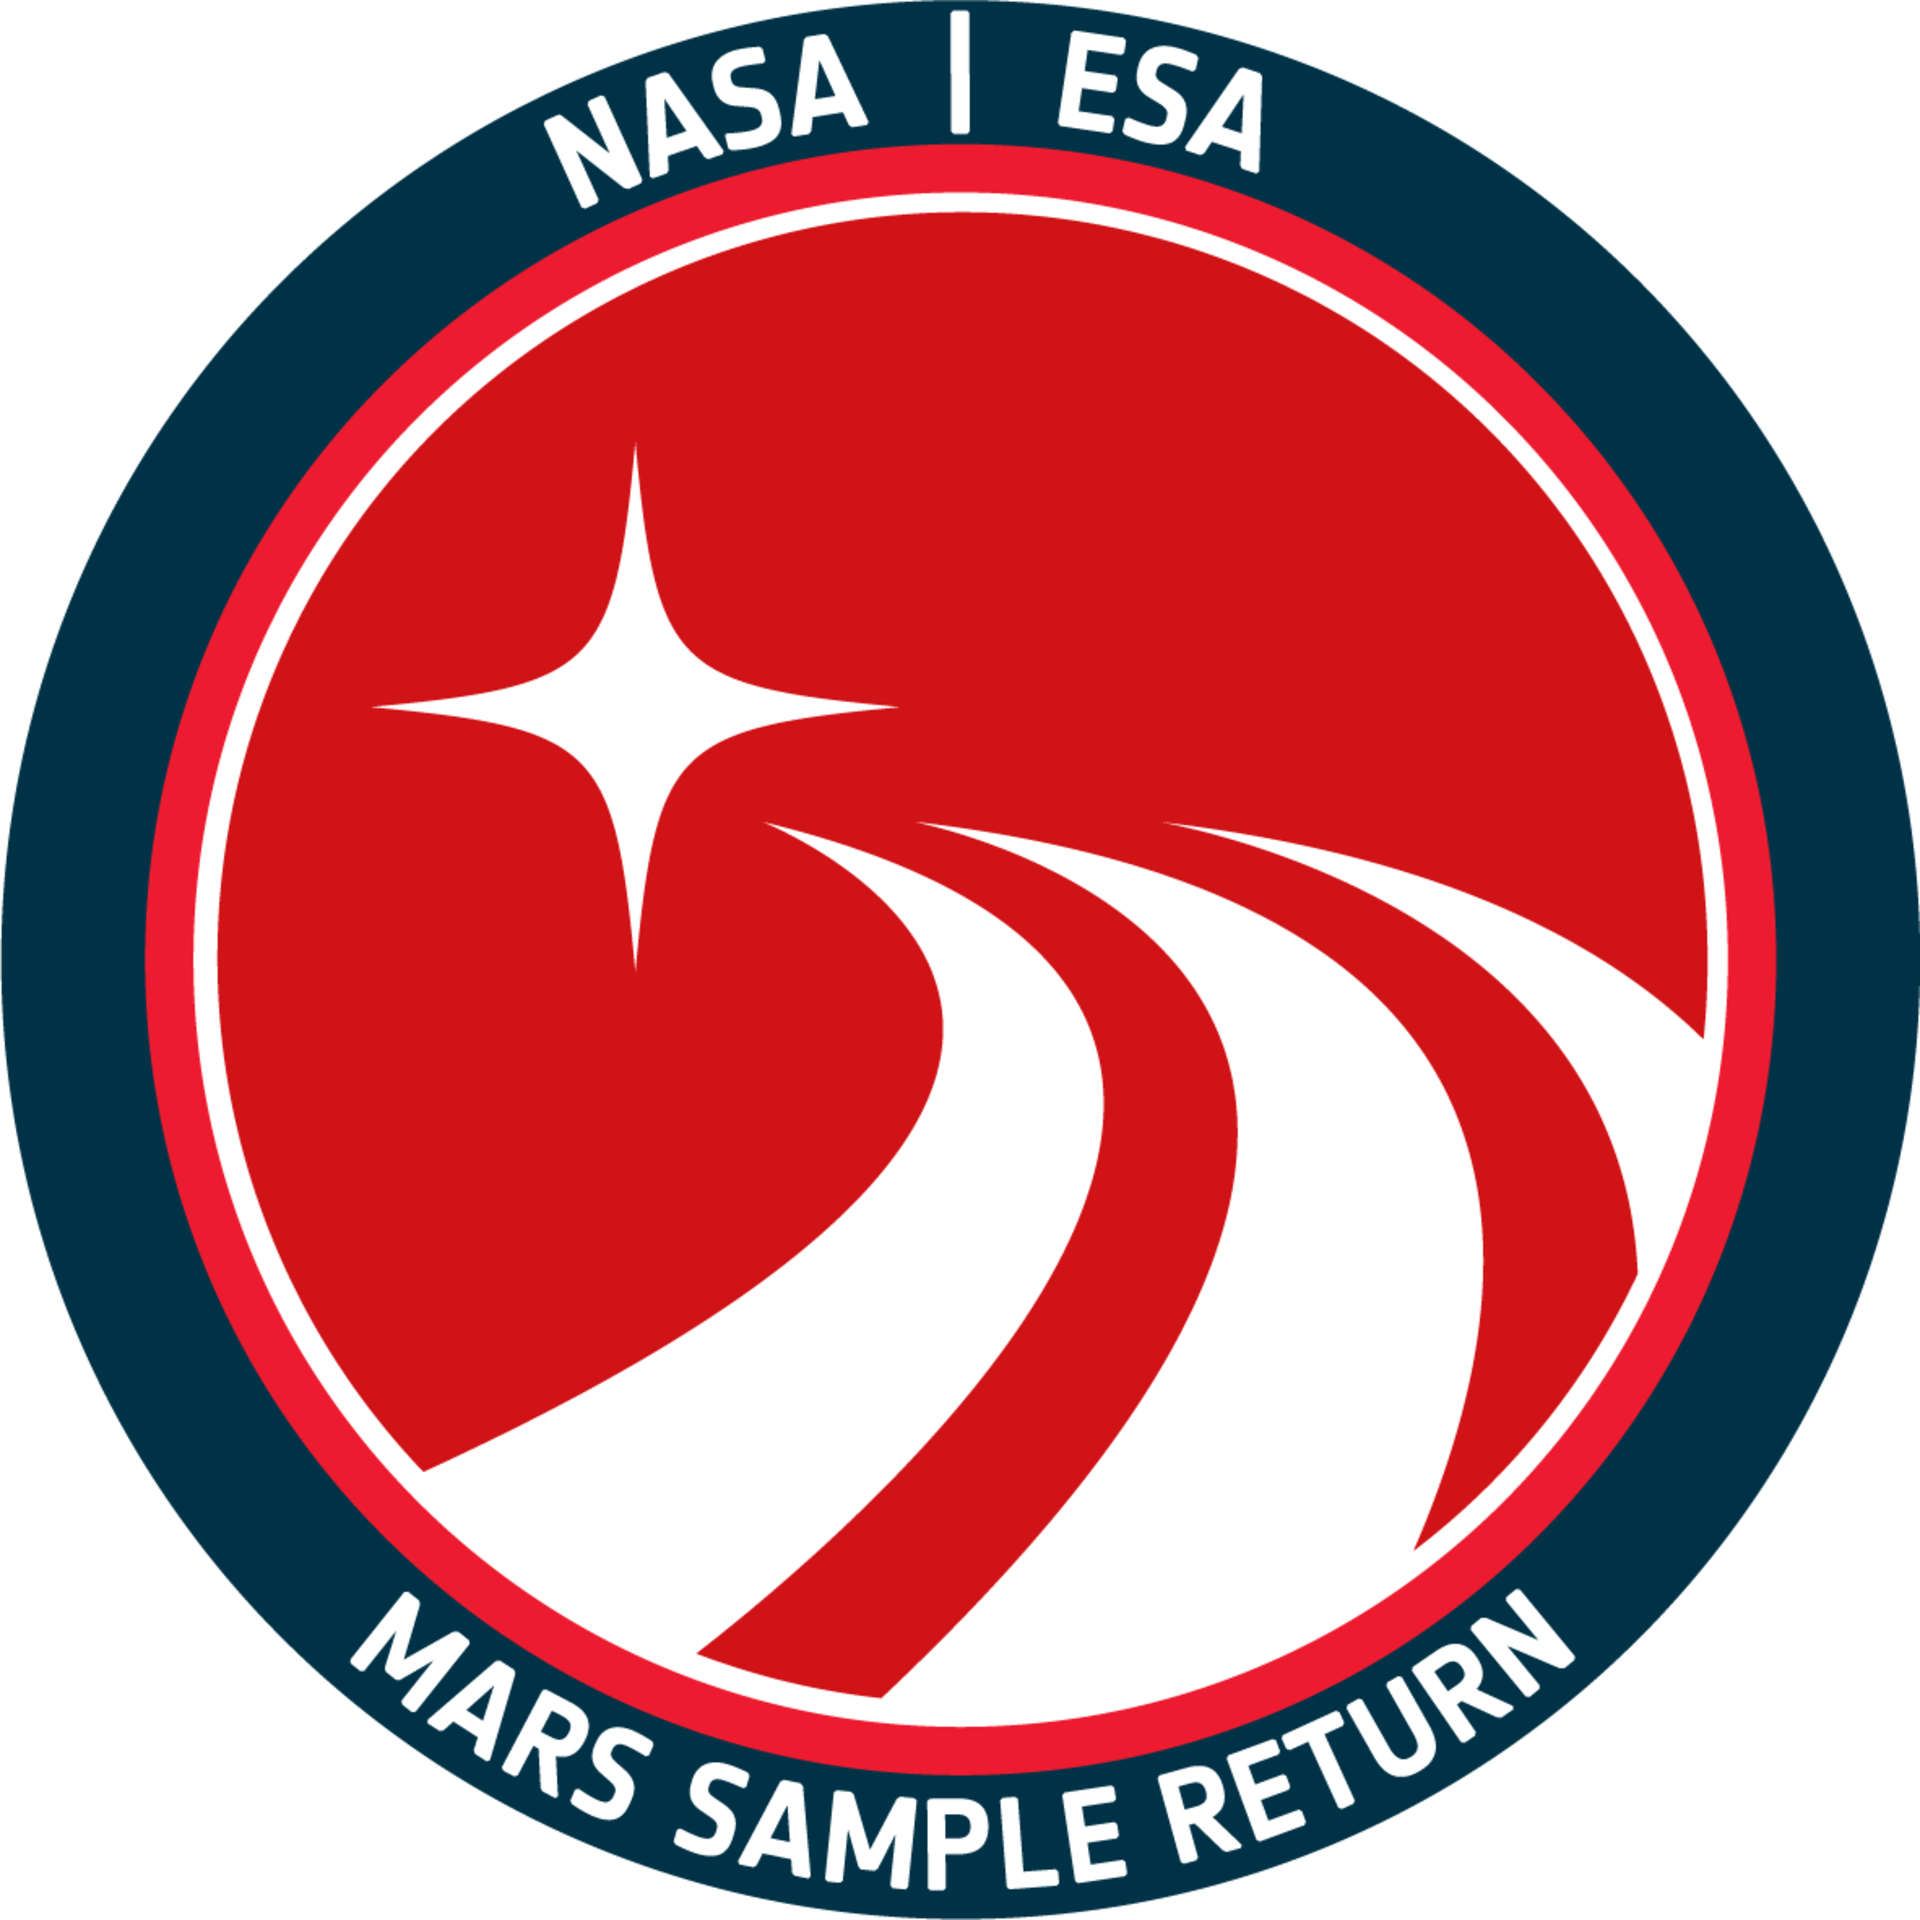 The NASA/ESA Mars Sample Return symbol features three lines curving toward a bright star, symbolizing the road to a sample return.